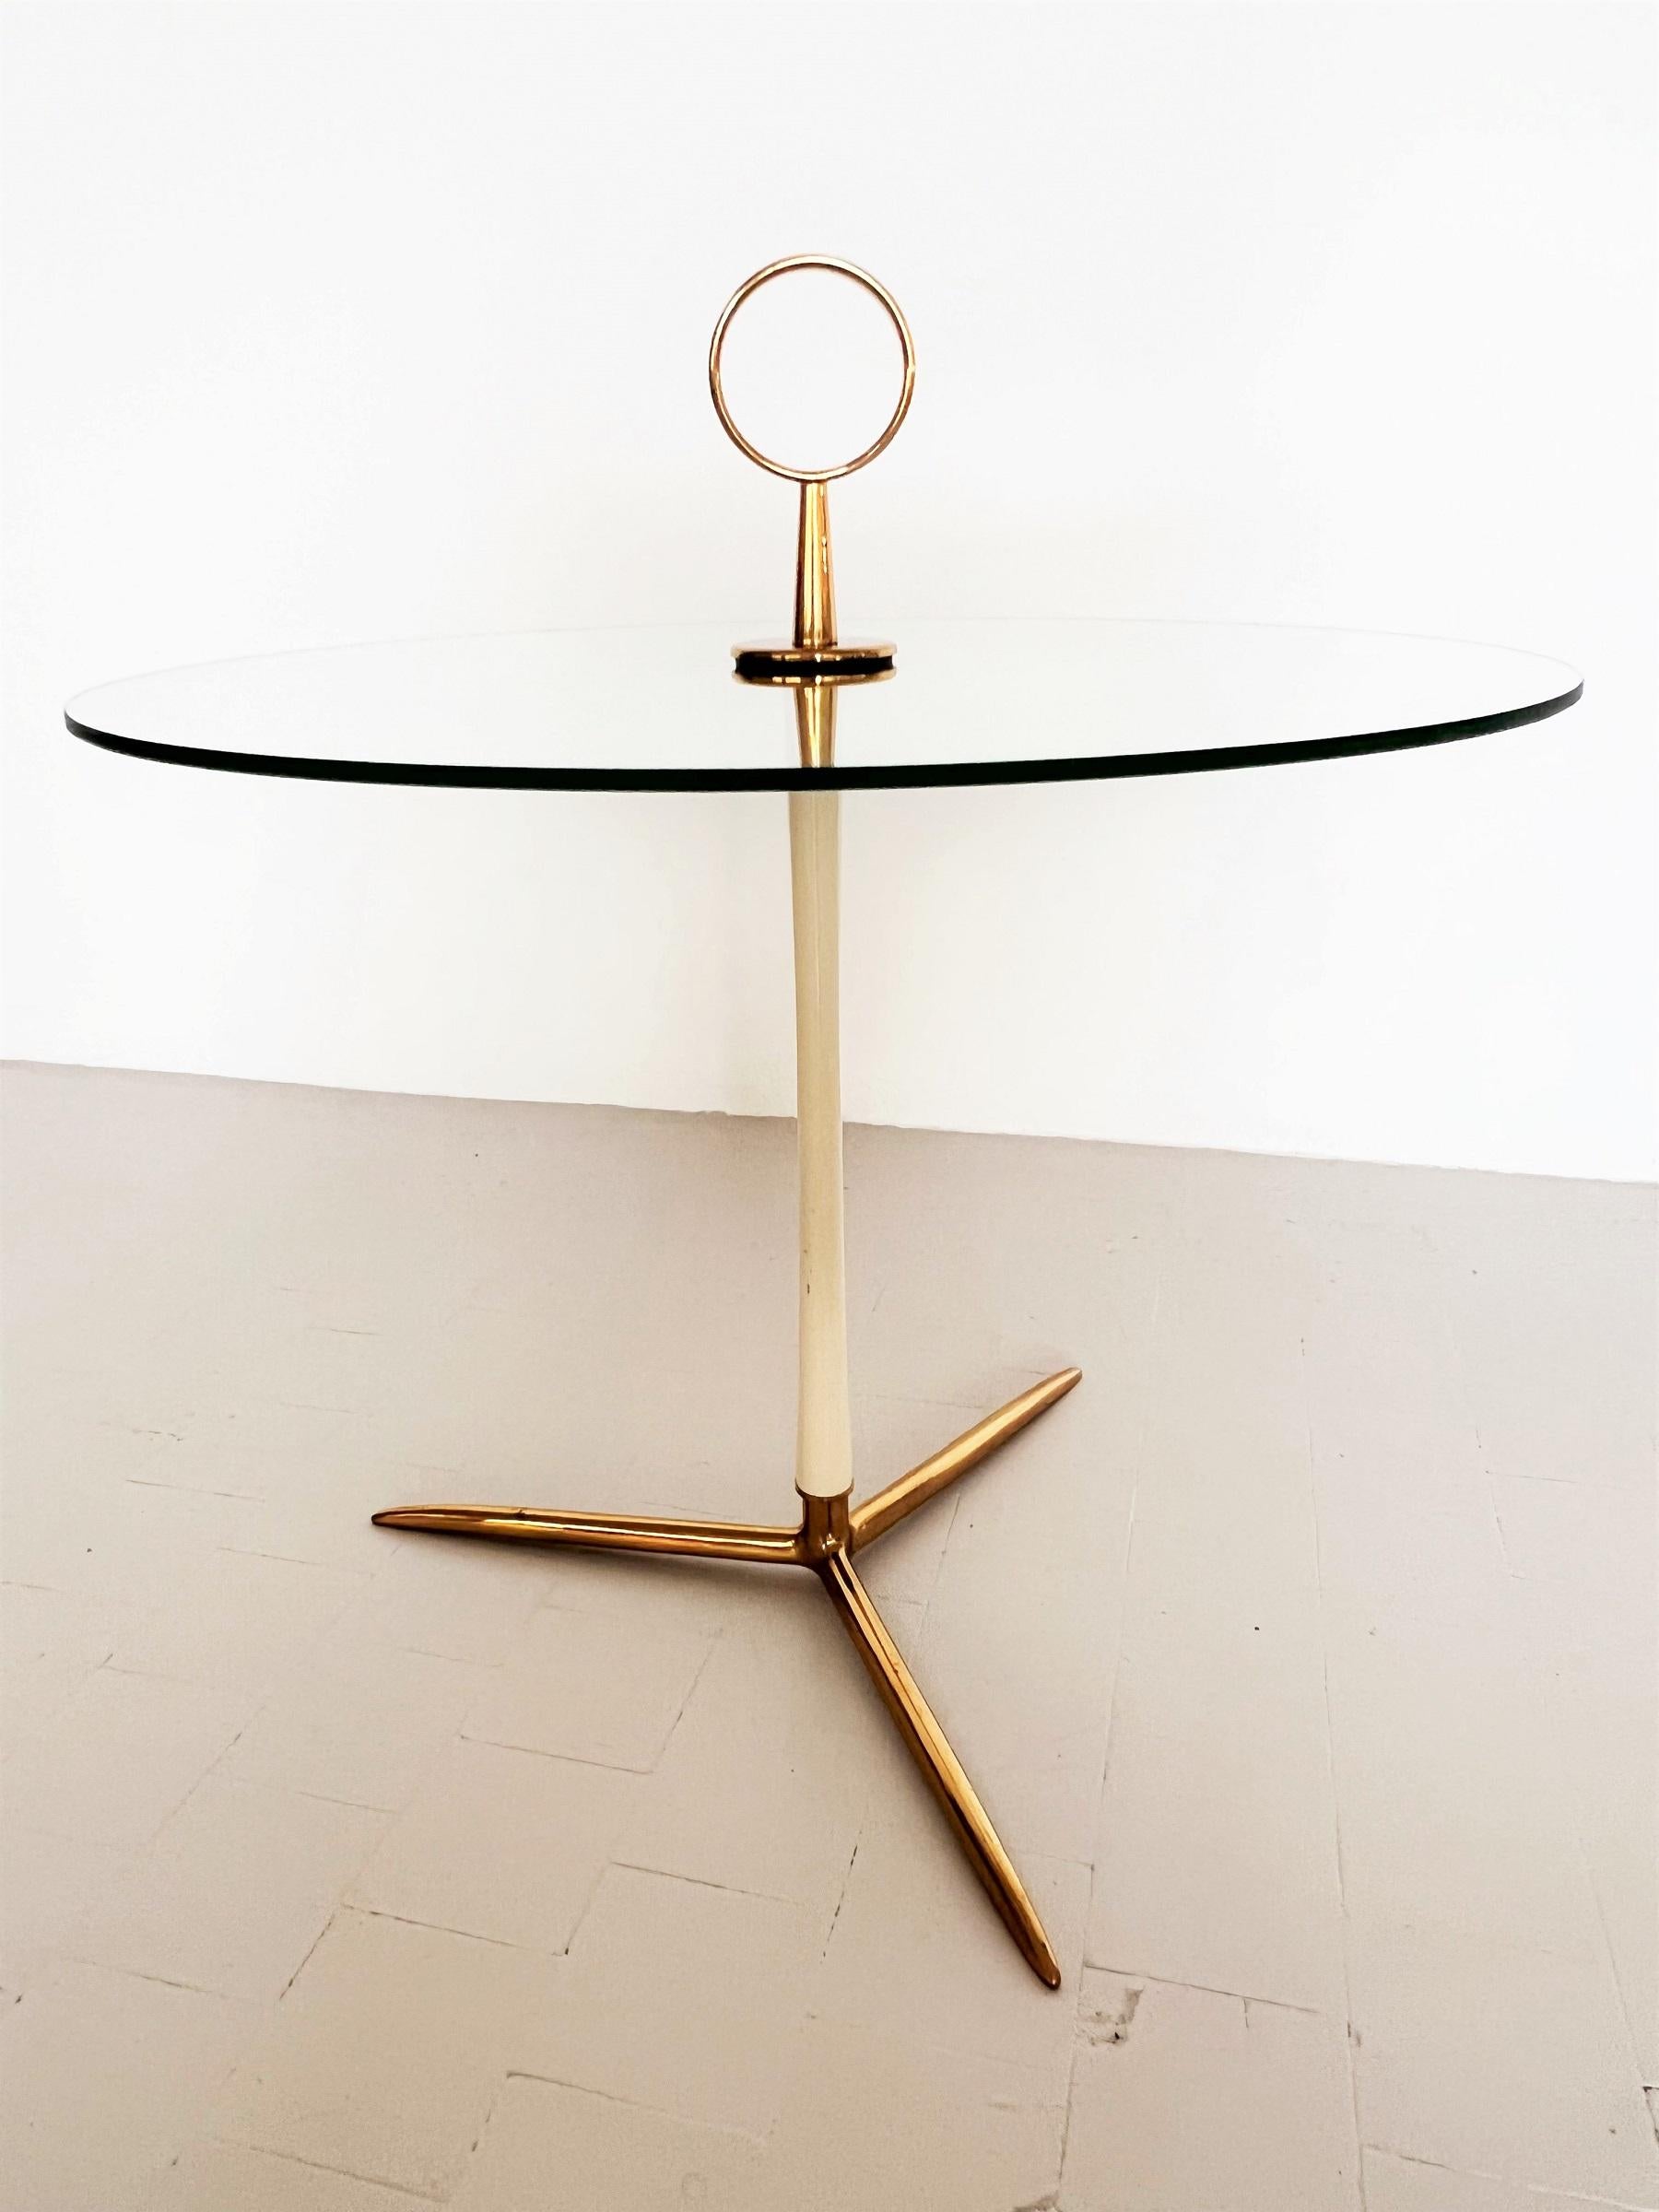 German Midcentury Side Table in Brass and Glass by Vereinigte Werkstätten, 1970s For Sale 6